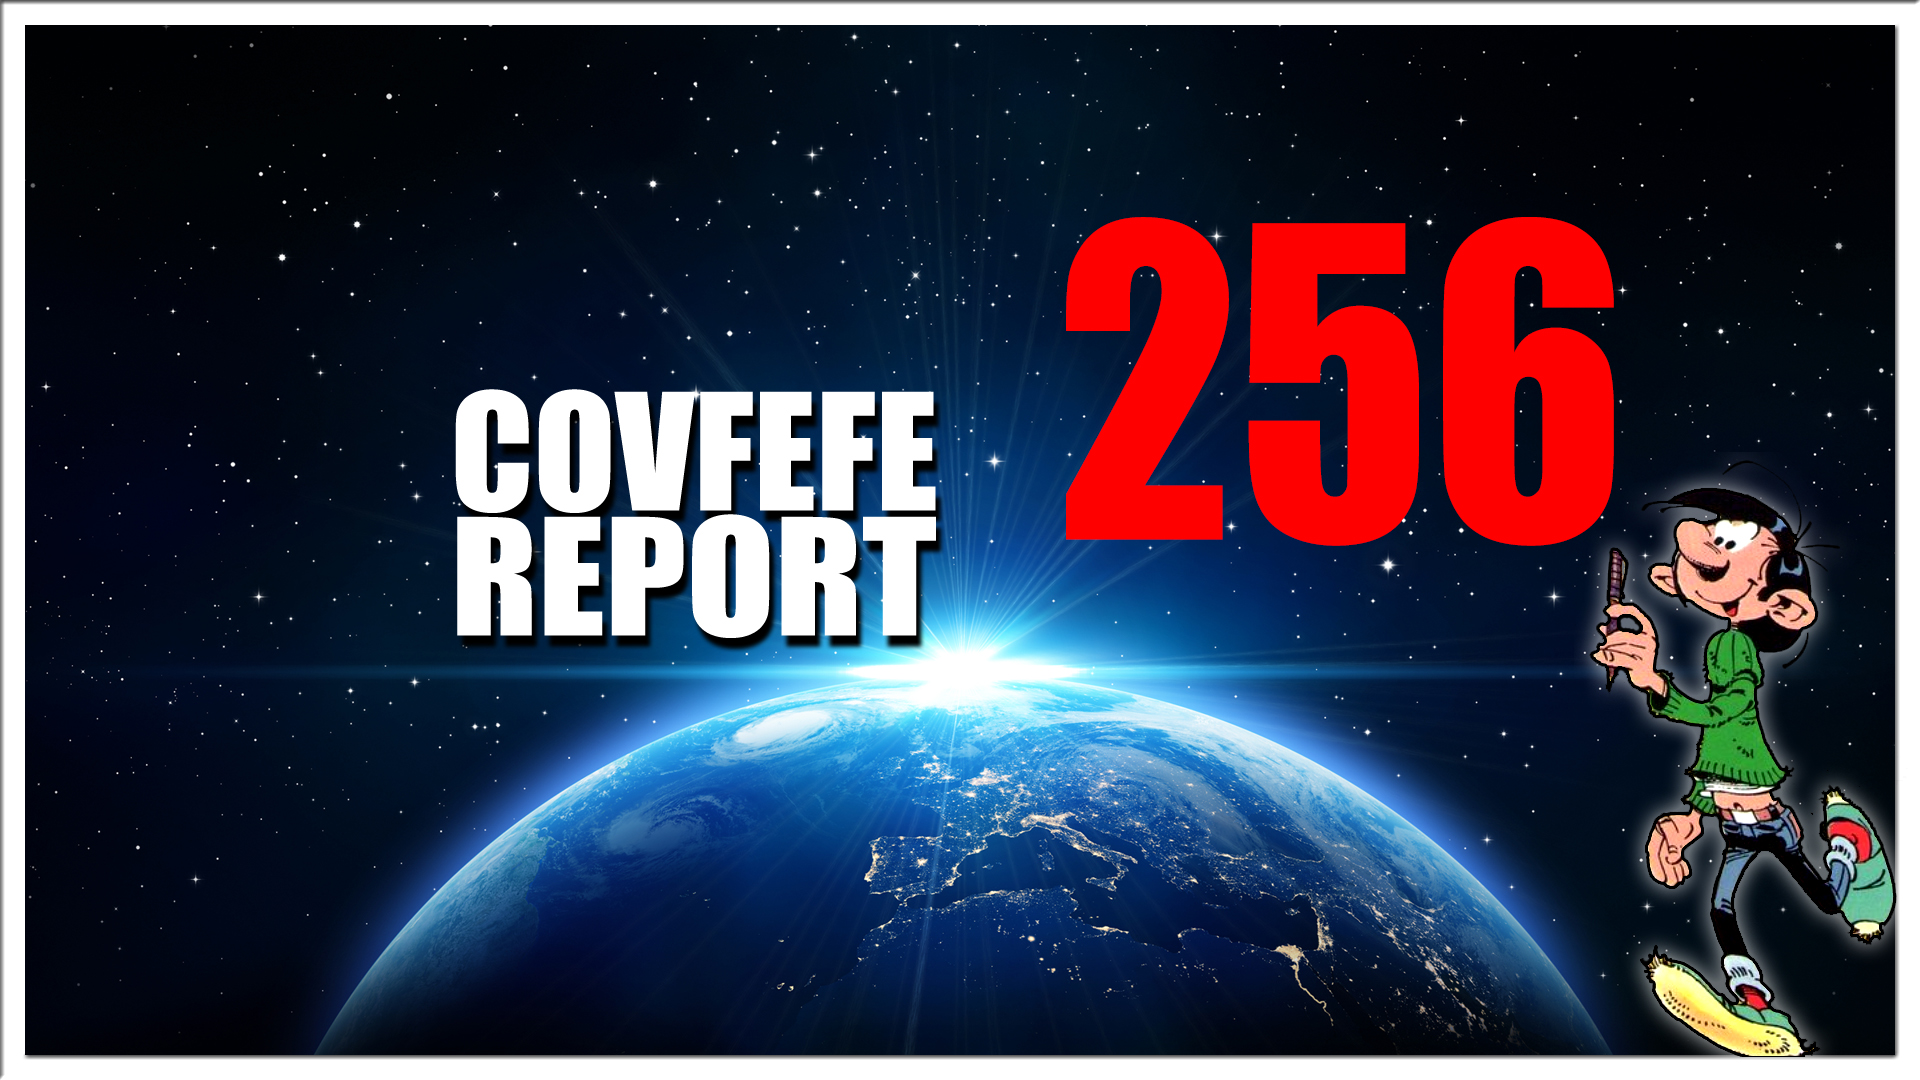 Covfefe Report 256. ngt